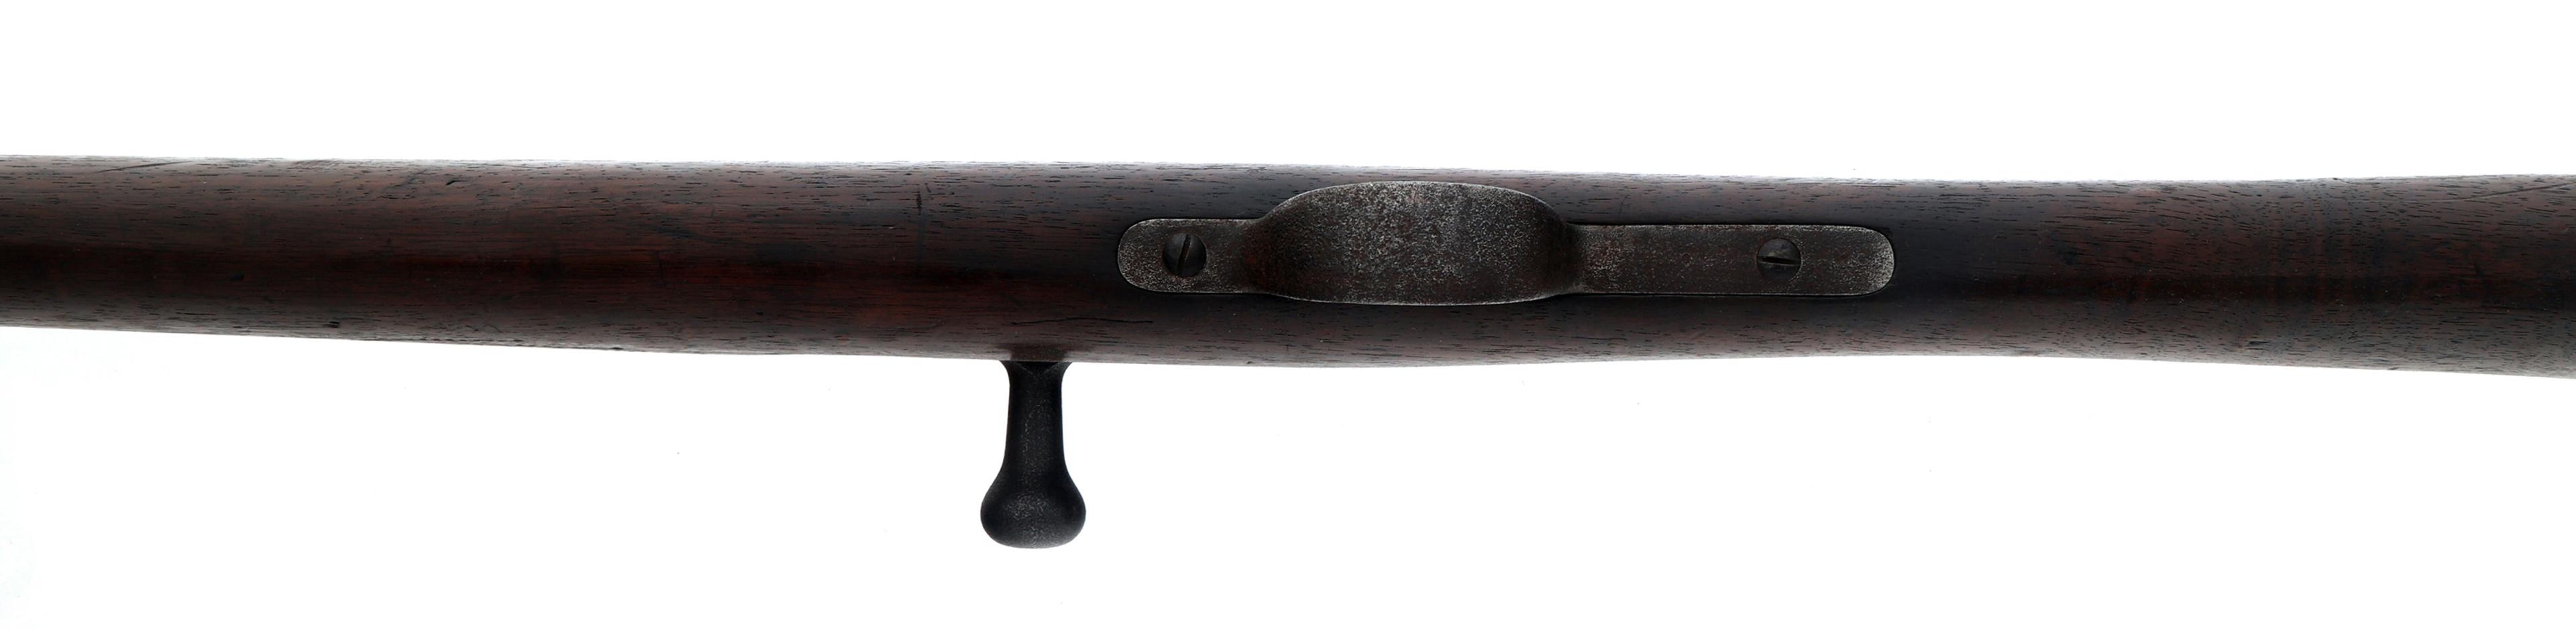 FRENCH MUTZIG MODEL 1866/74 11mm CALIBER RIFLE